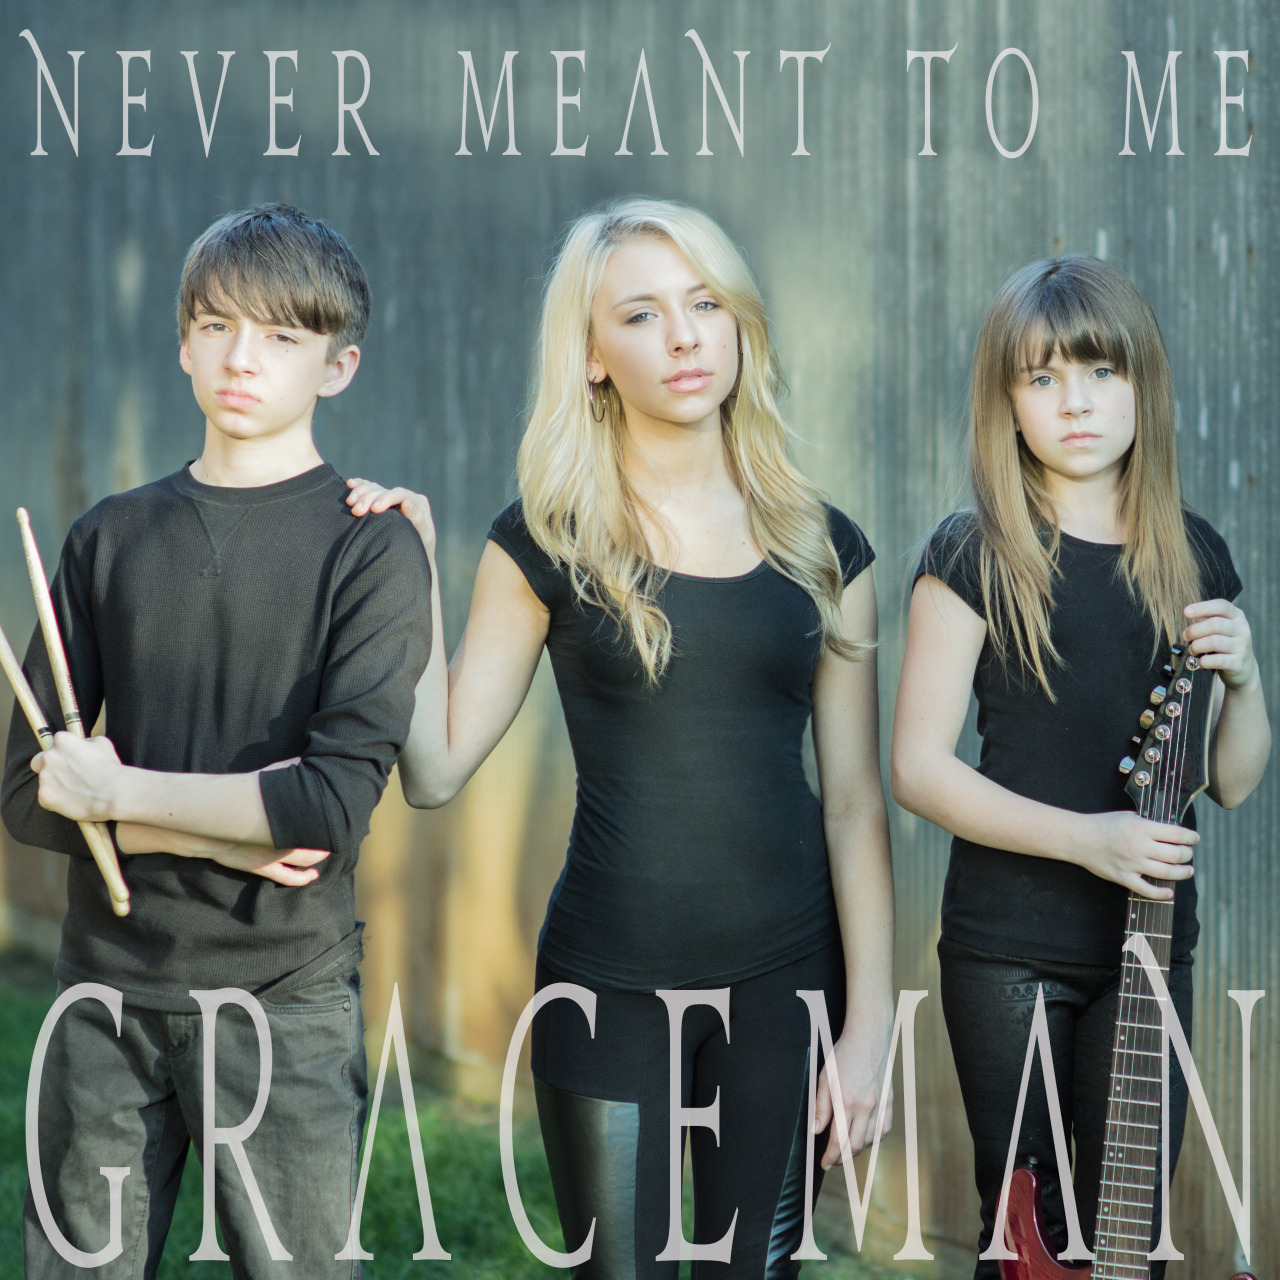 Graceman Music